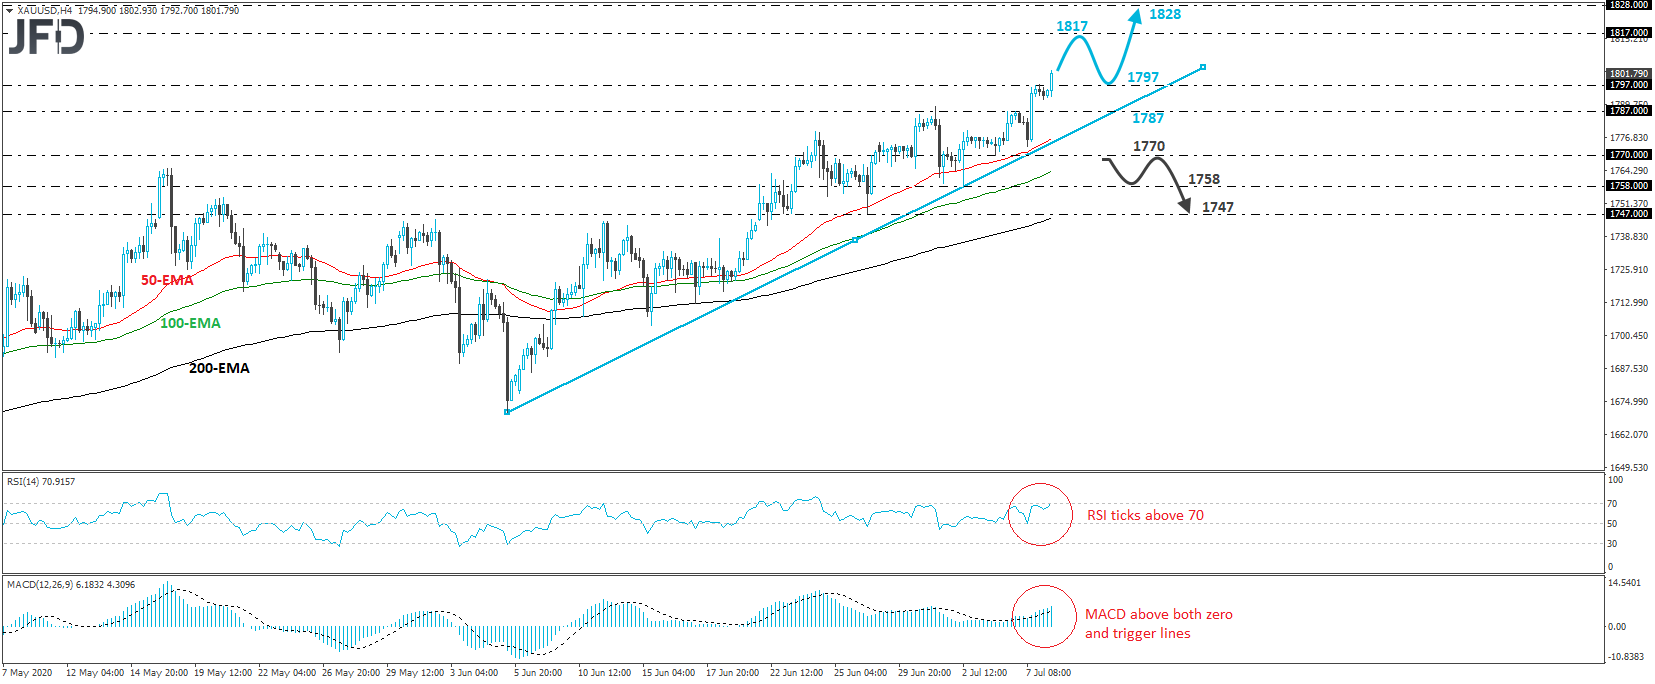 XAU/USD gold 4-hour chart technical analysis